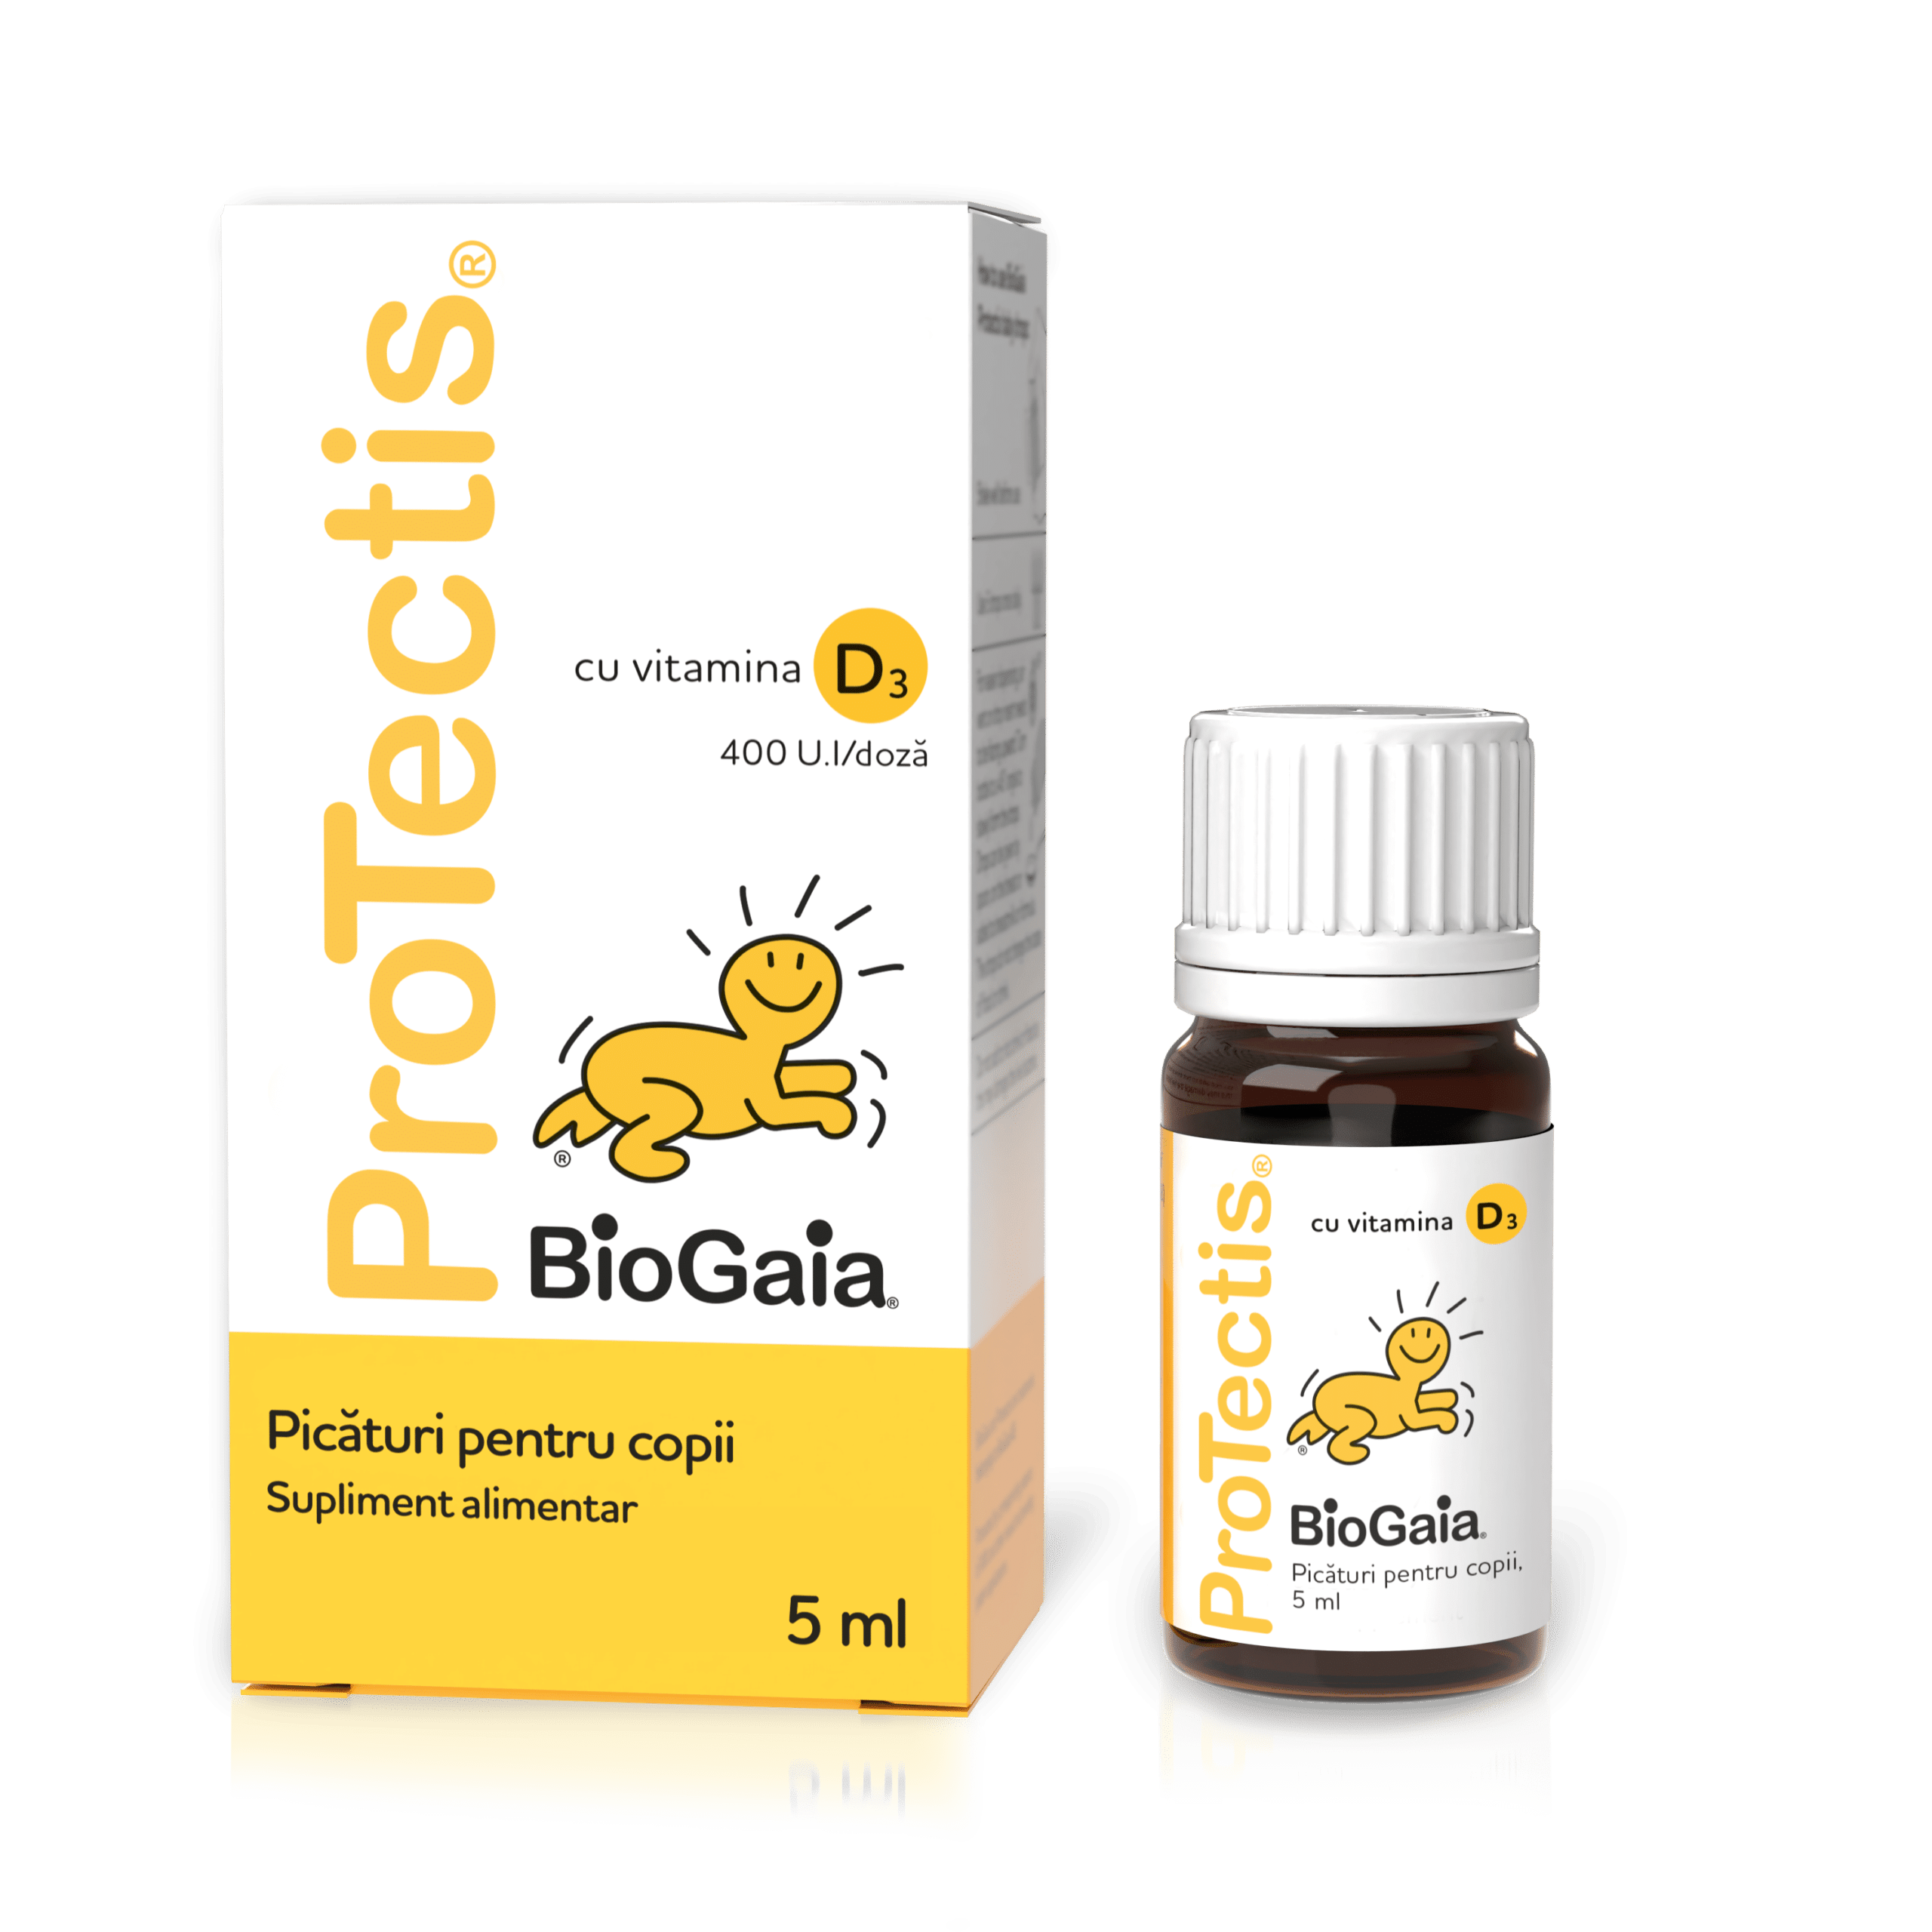 BioGaia ProTectis cu vitamina D3, picături pentru copii